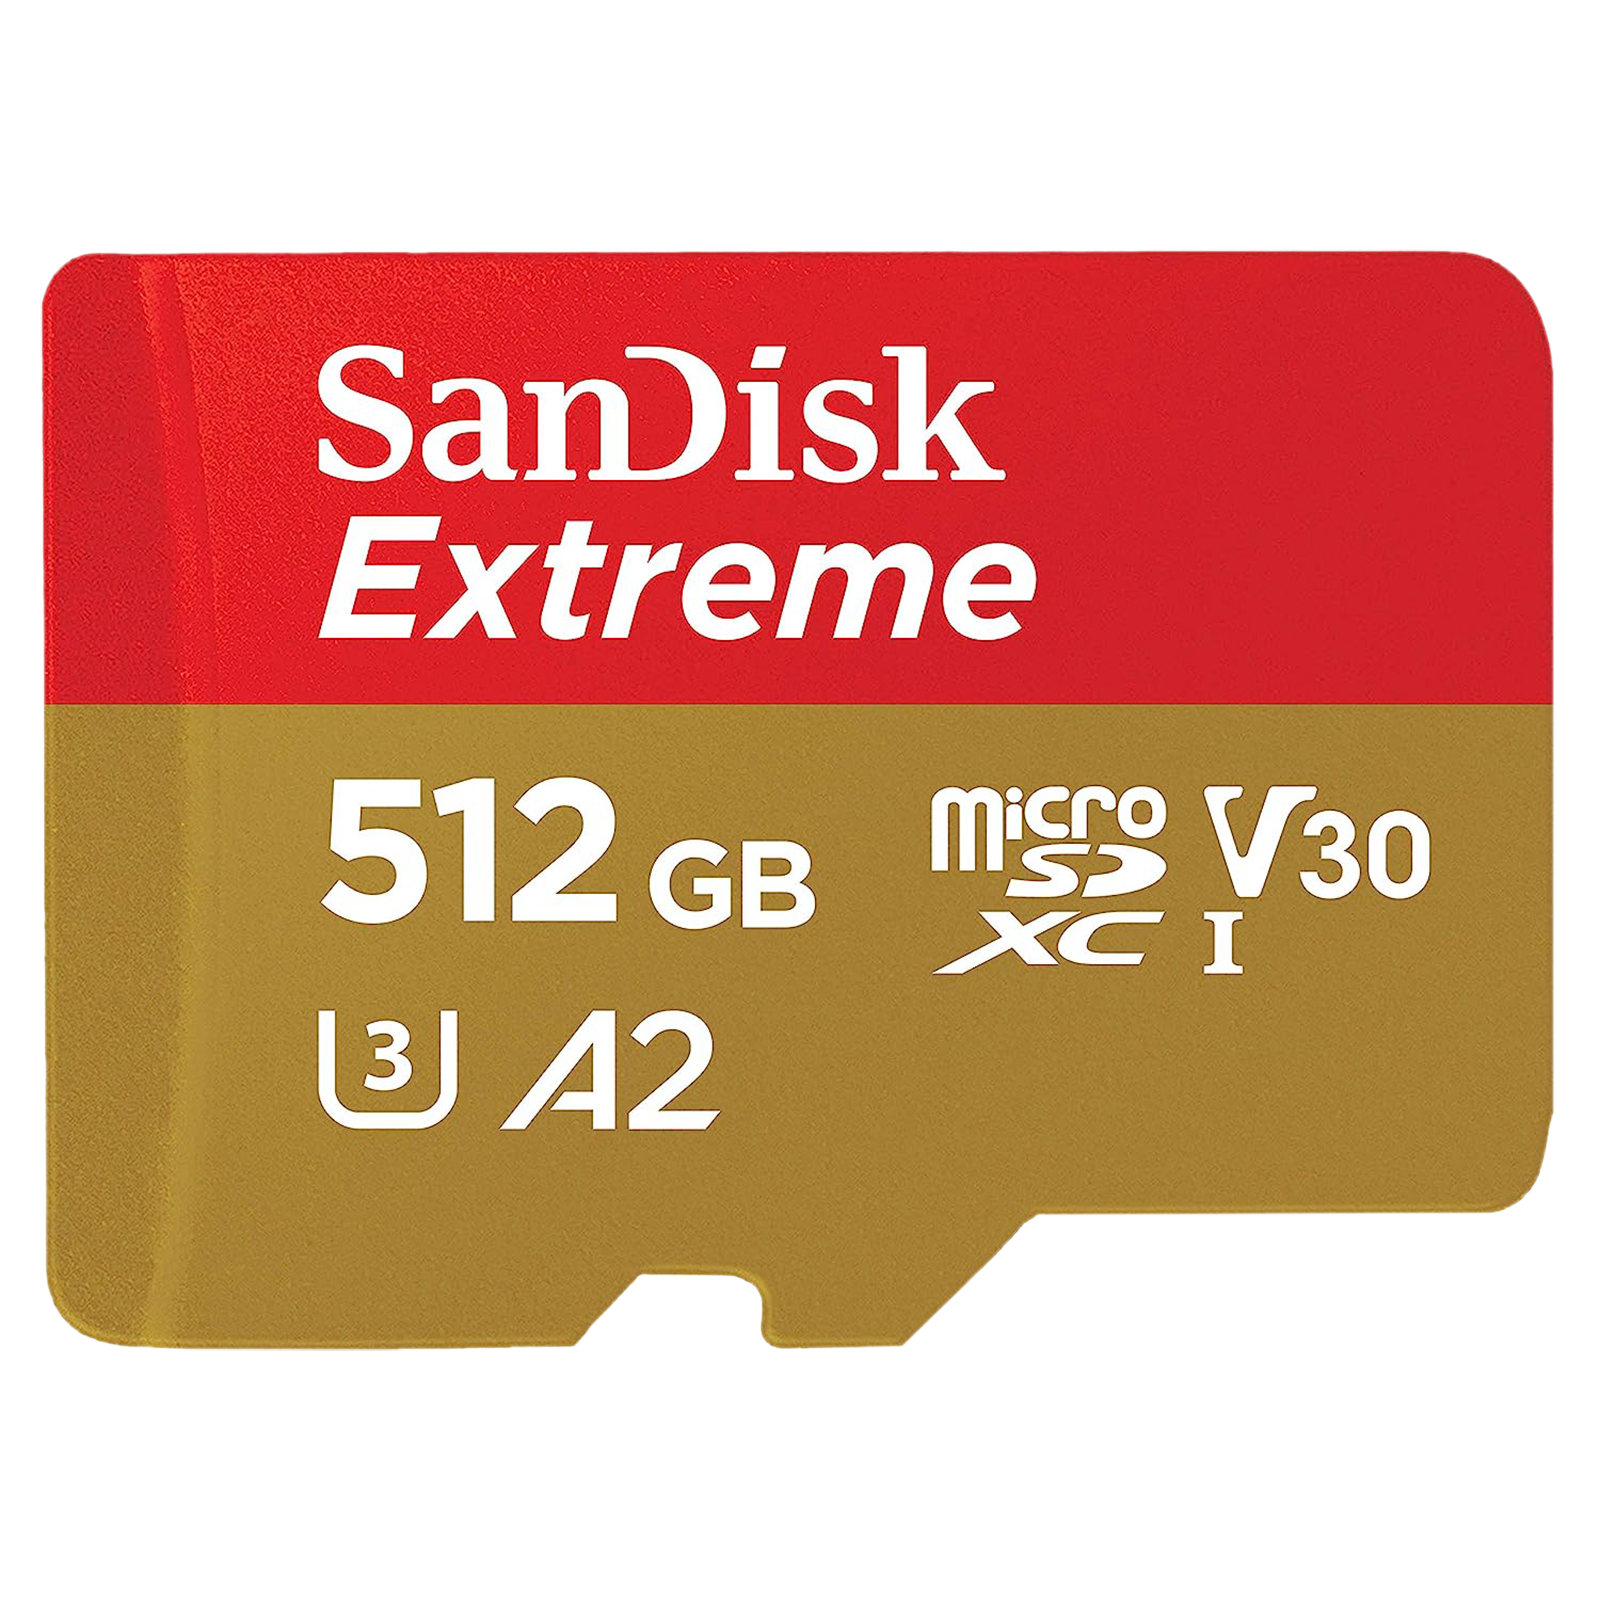 SanDisk Extreme MicroSDXC 512GB Class 3 190MB/s Memory Card